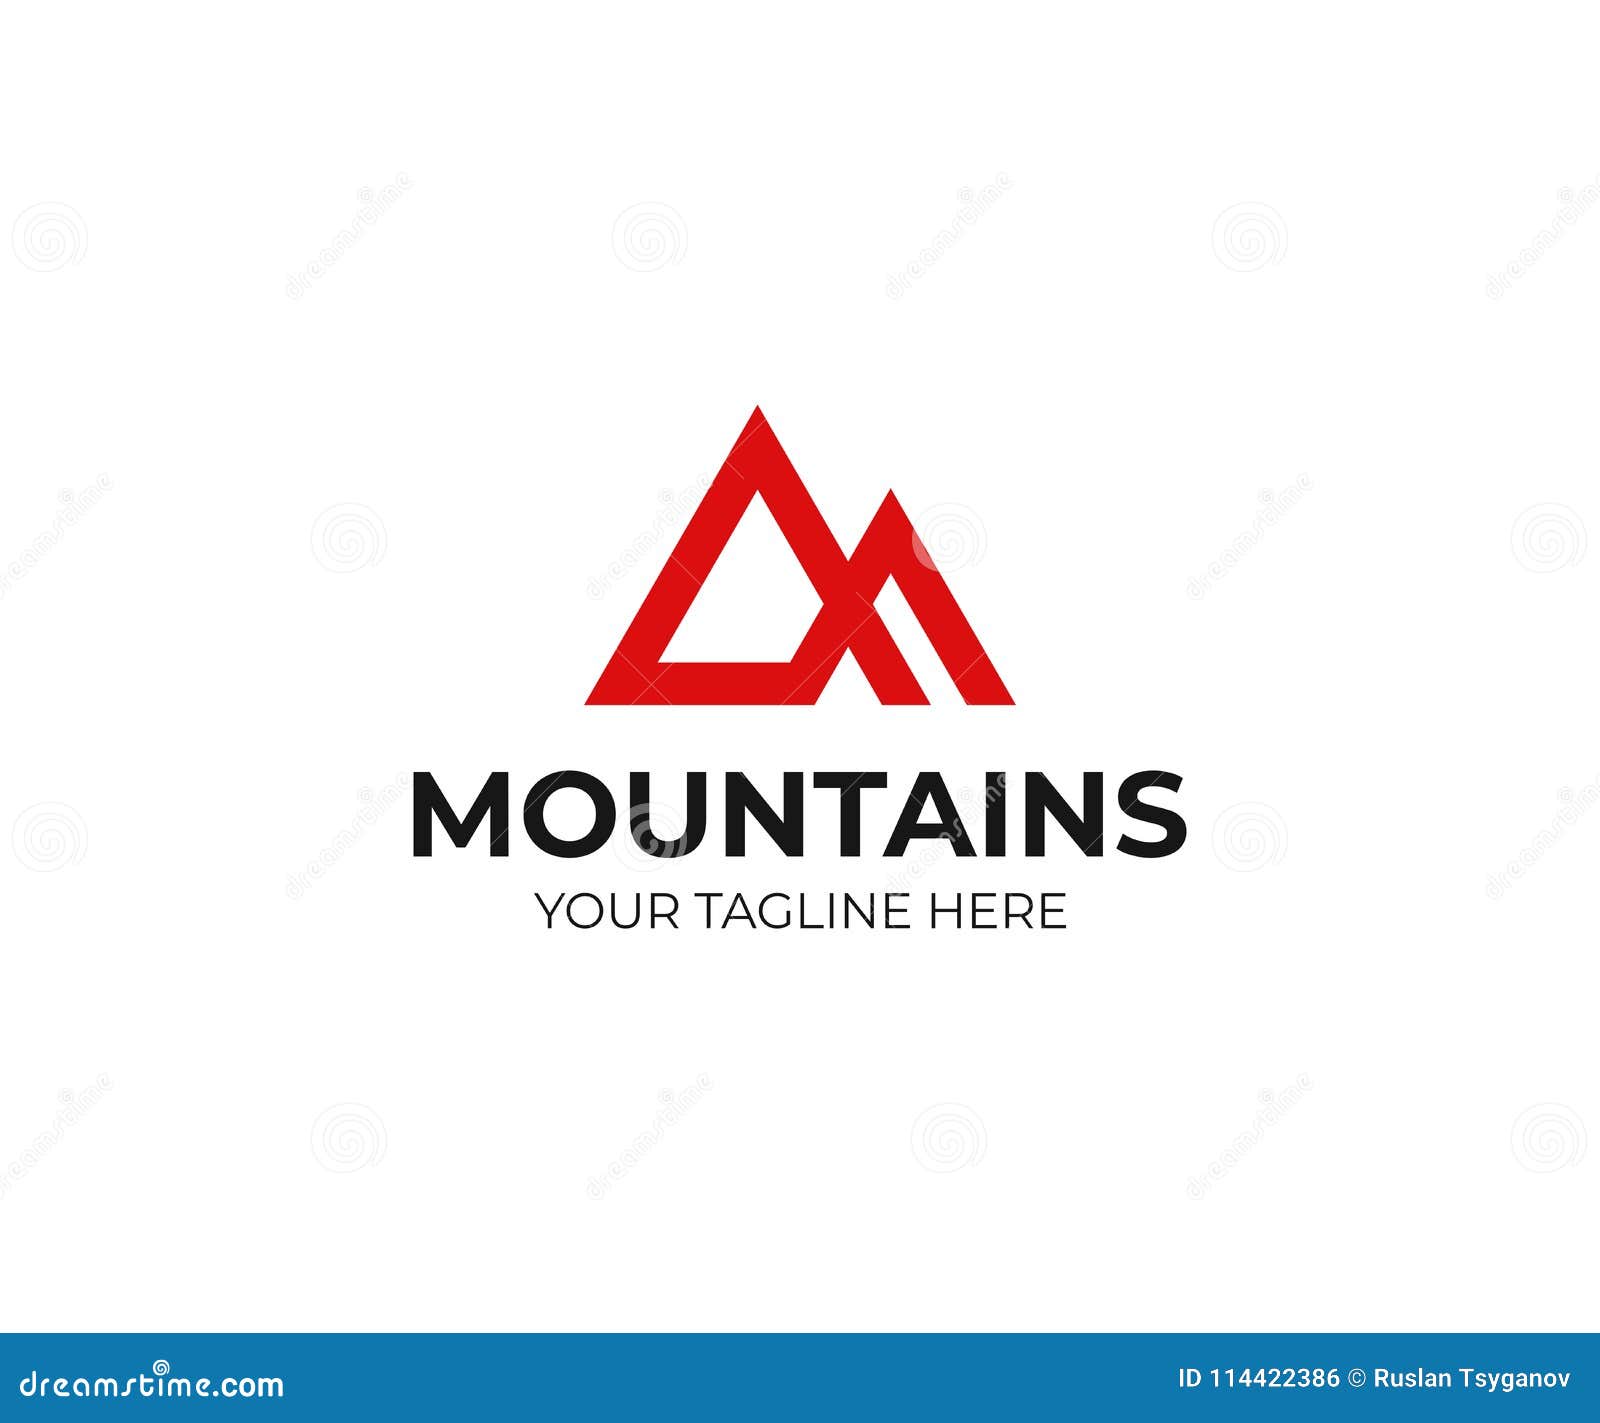 abstract mountains logo template. triangle mountain peak  